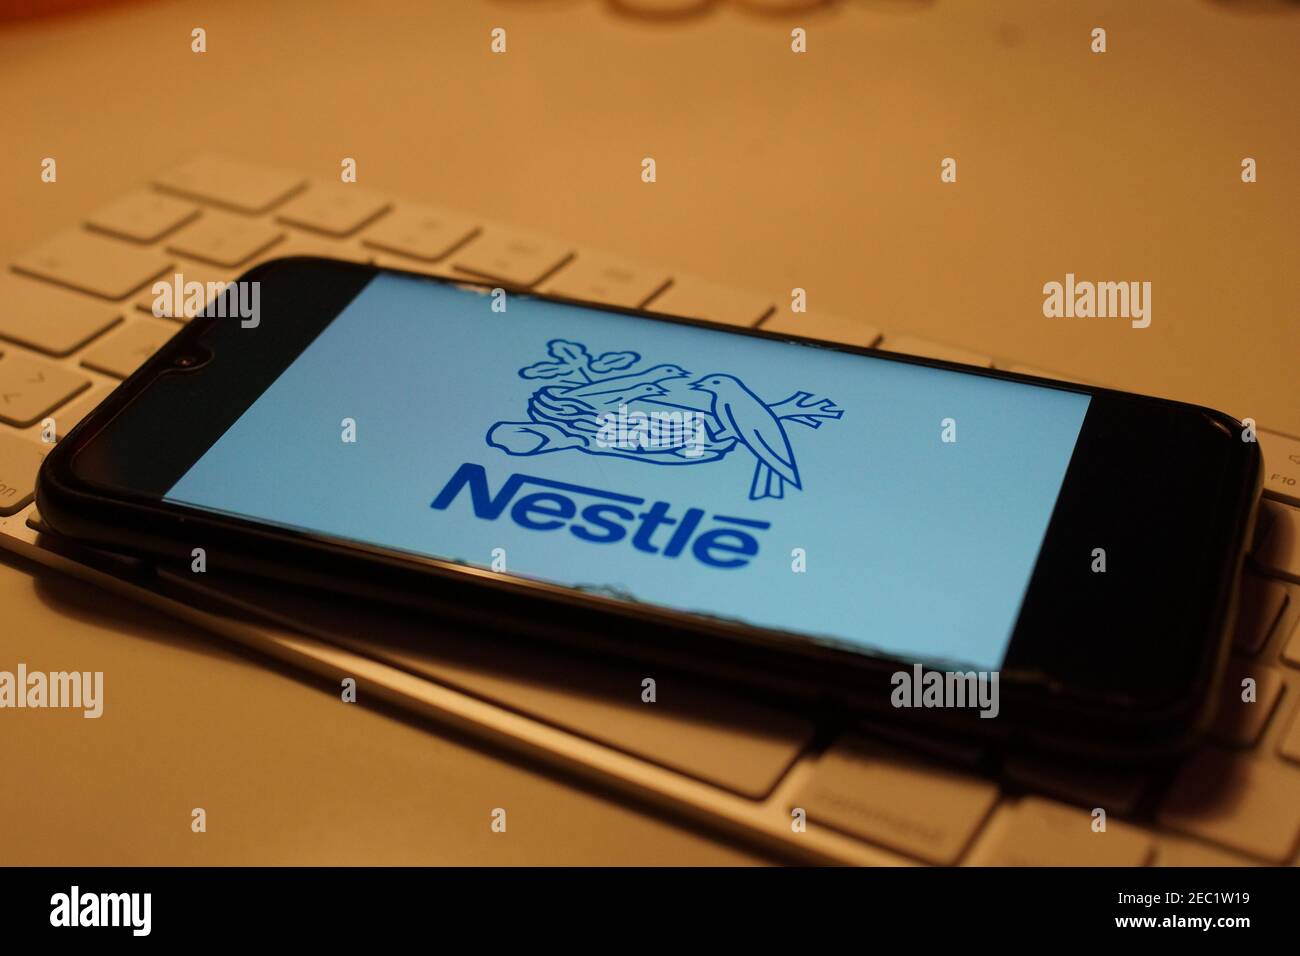 Smartphone with Nestle logo on computer keyboard Stock Photo